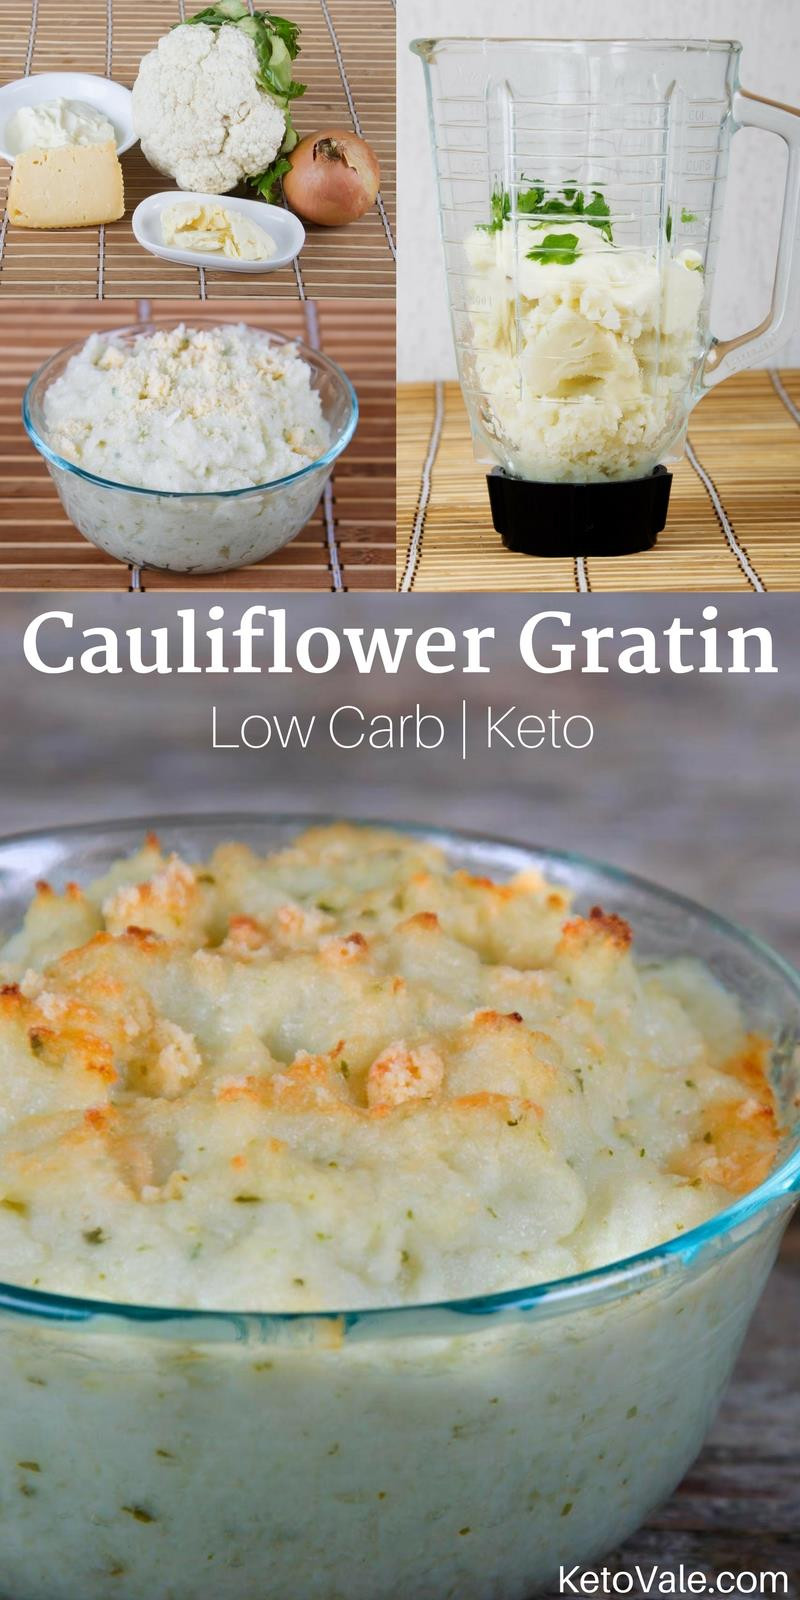 Keto Cauliflower Recipes
 Easy Cauliflower Gratin with Cheese Recipe